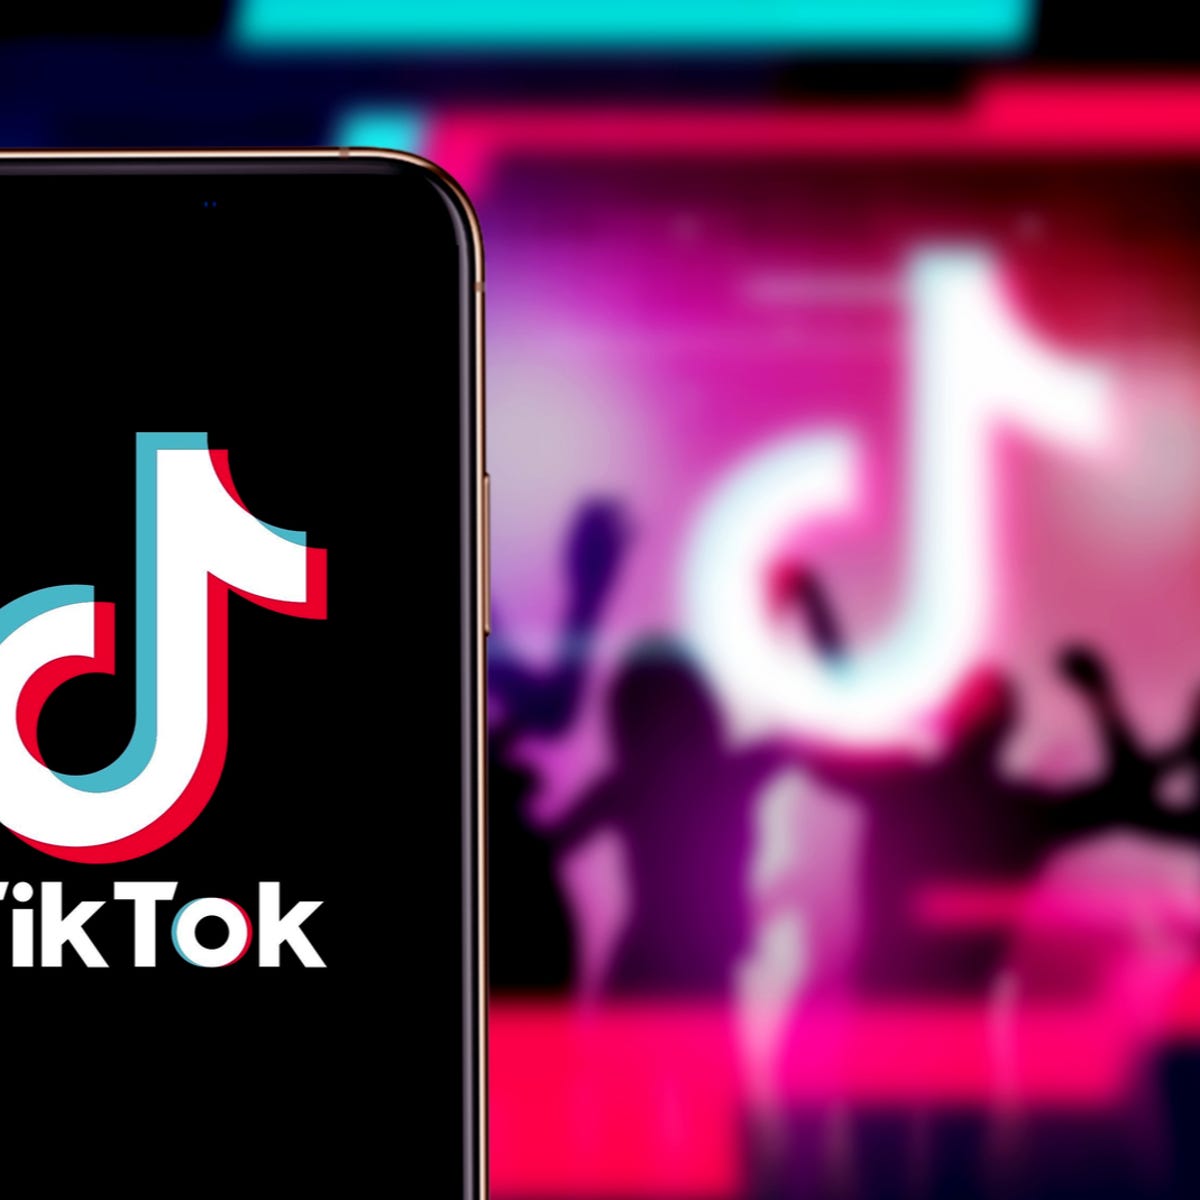 Subway Surfers reaches 4B lifetime downloads thanks to TikTok